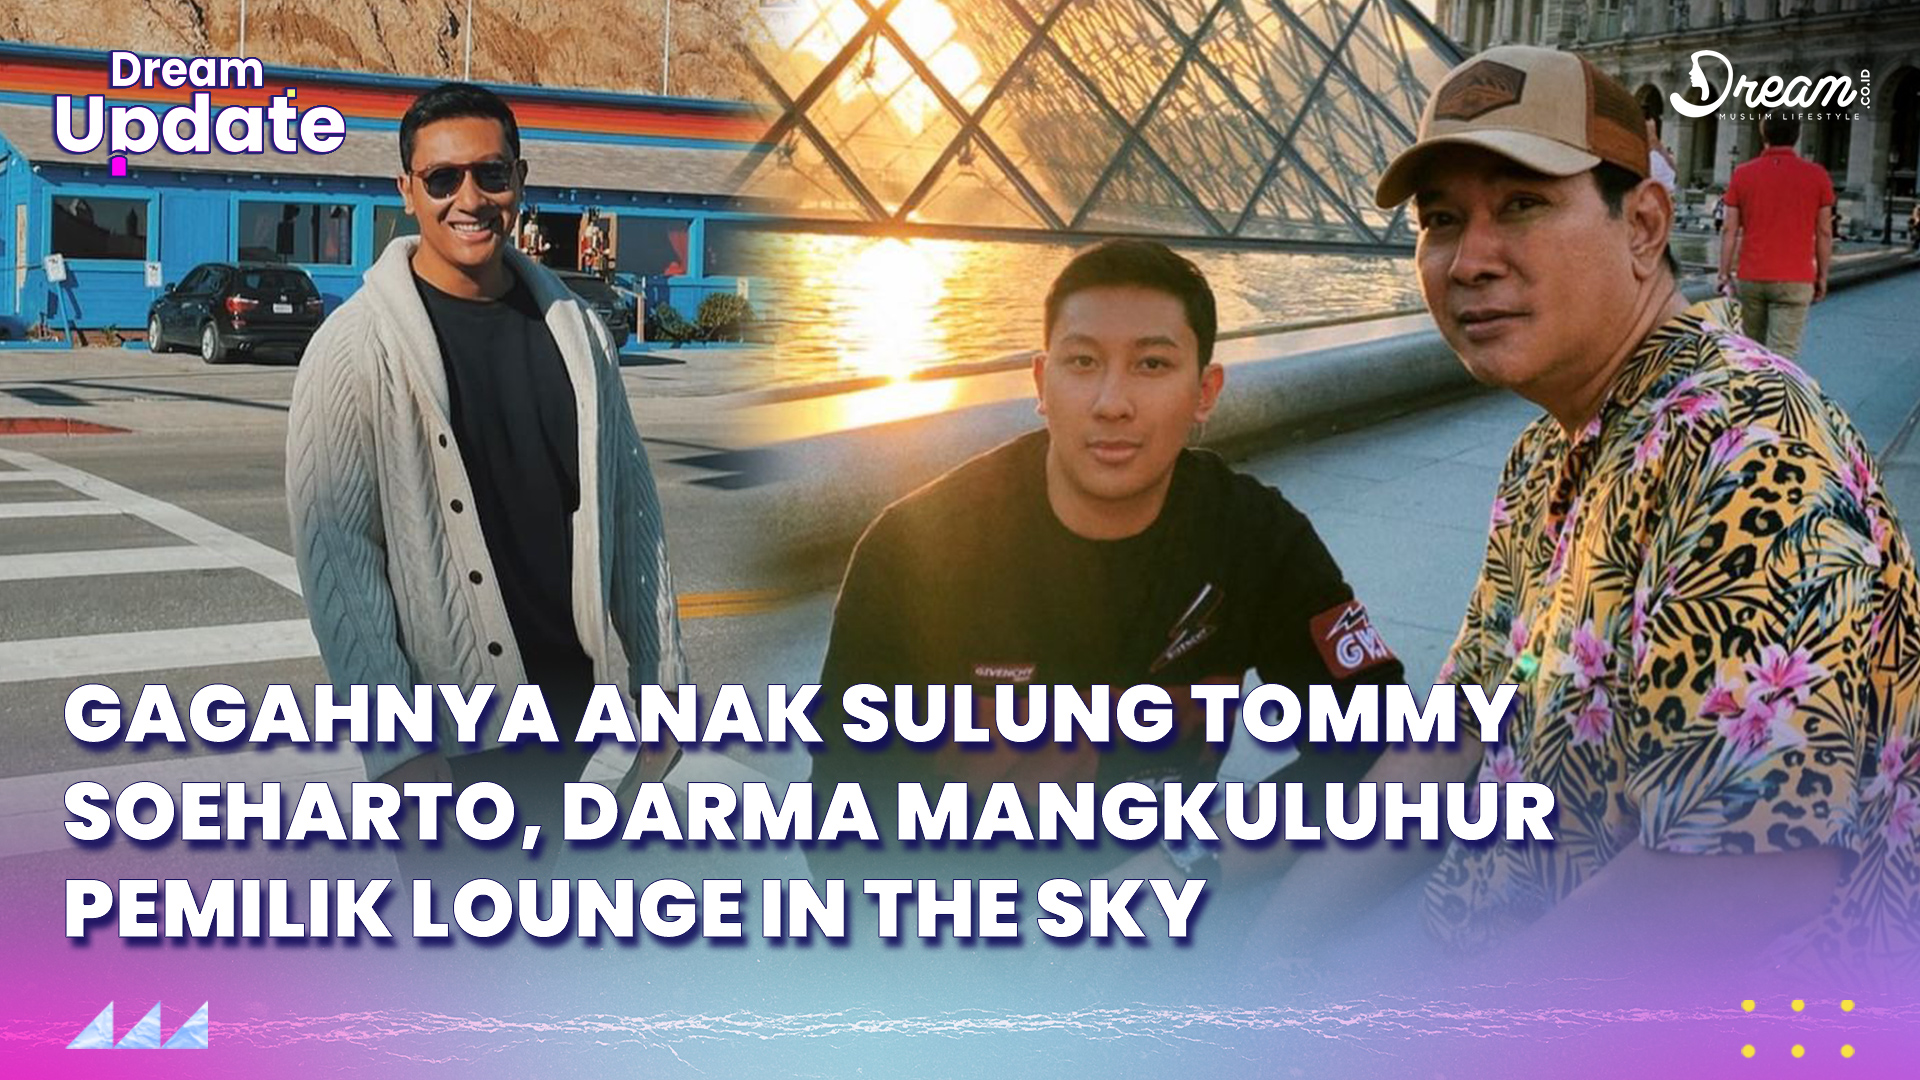 Potret Gagahnya Anak Sulung Tommy Soeharto, Darma Mangkuluhur Pemilik Lounge in The Sky